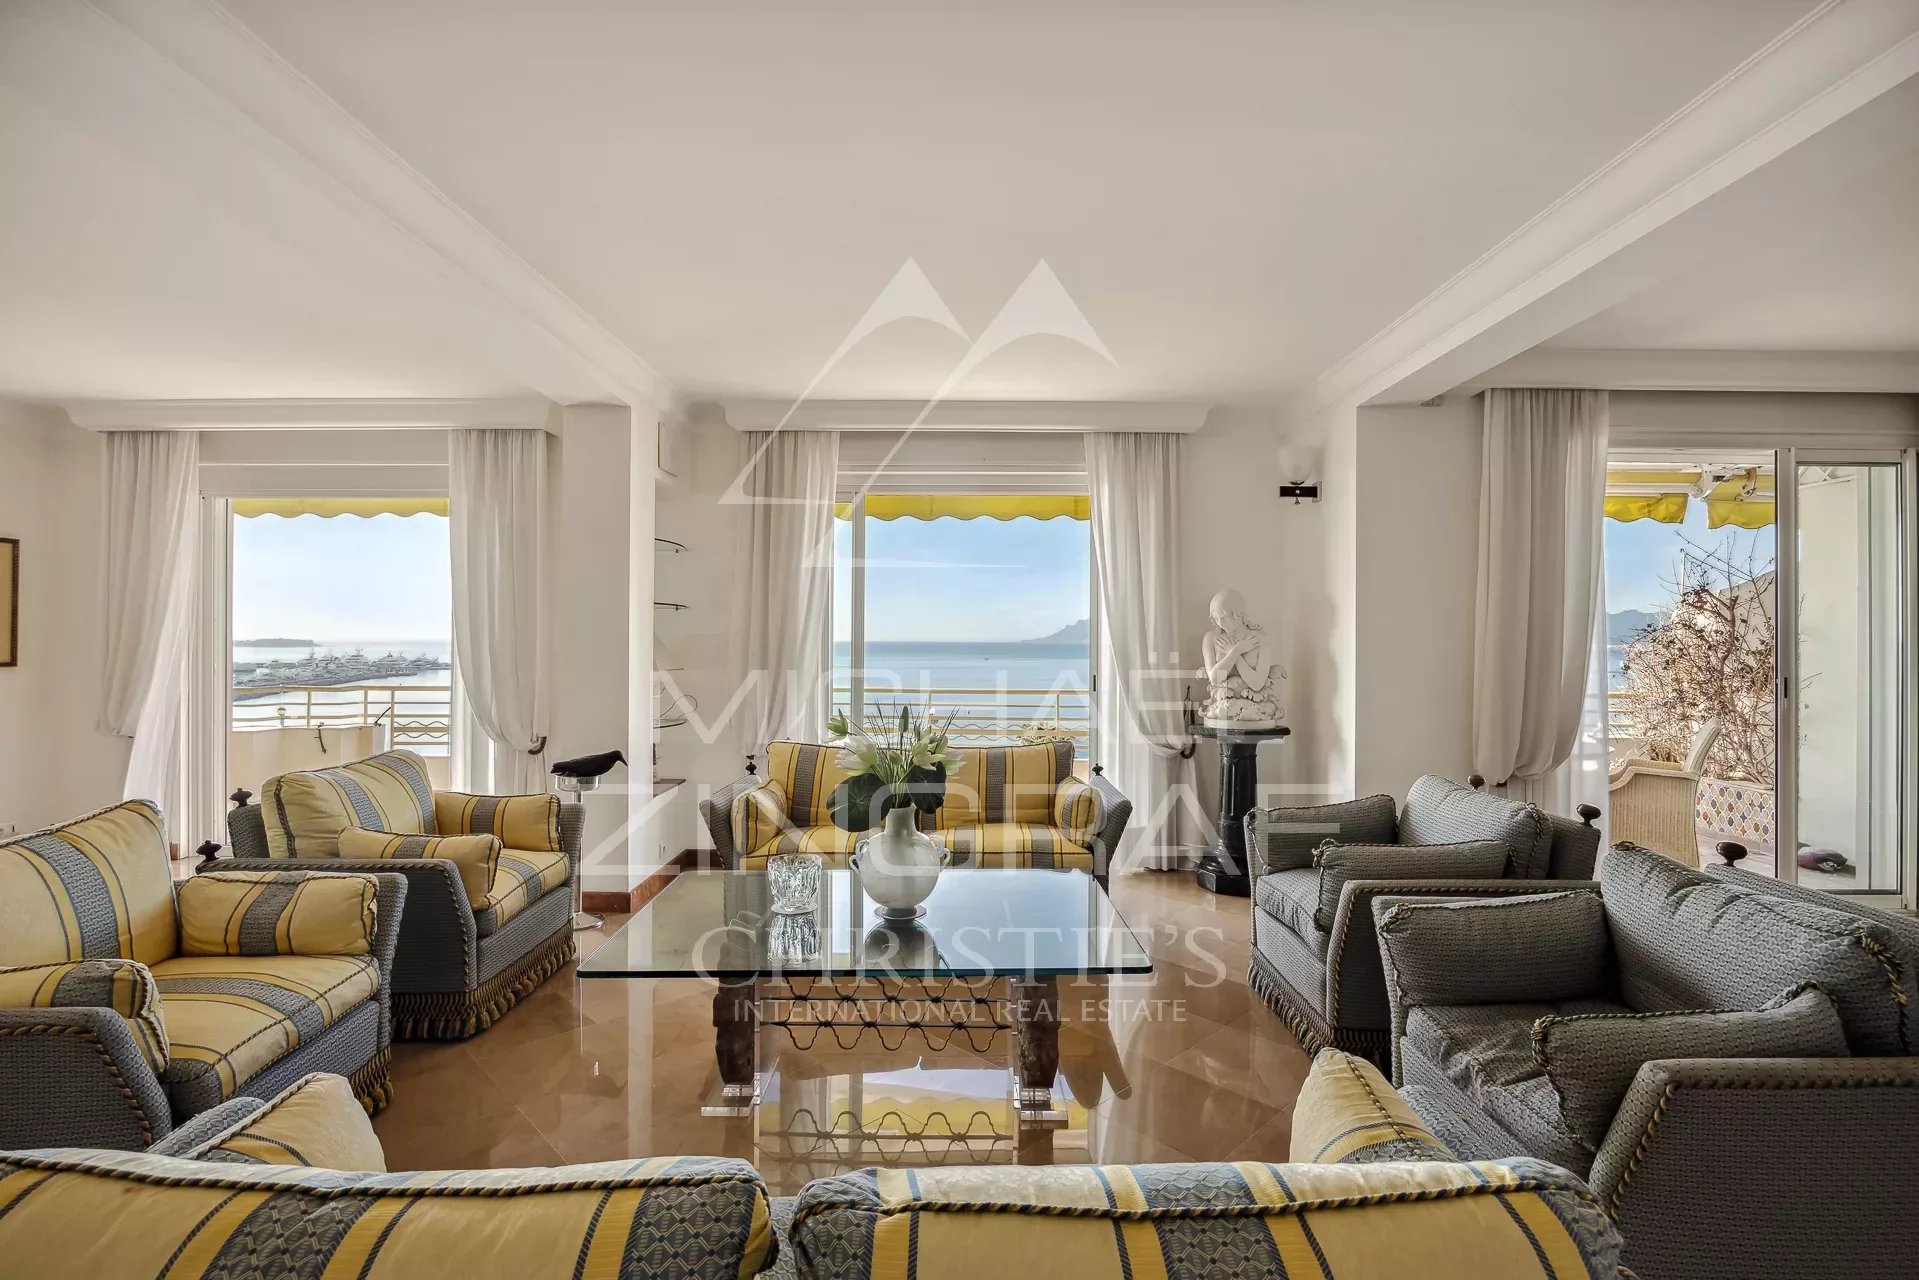 Cannes Croisette - Splendid 270 m² apartment